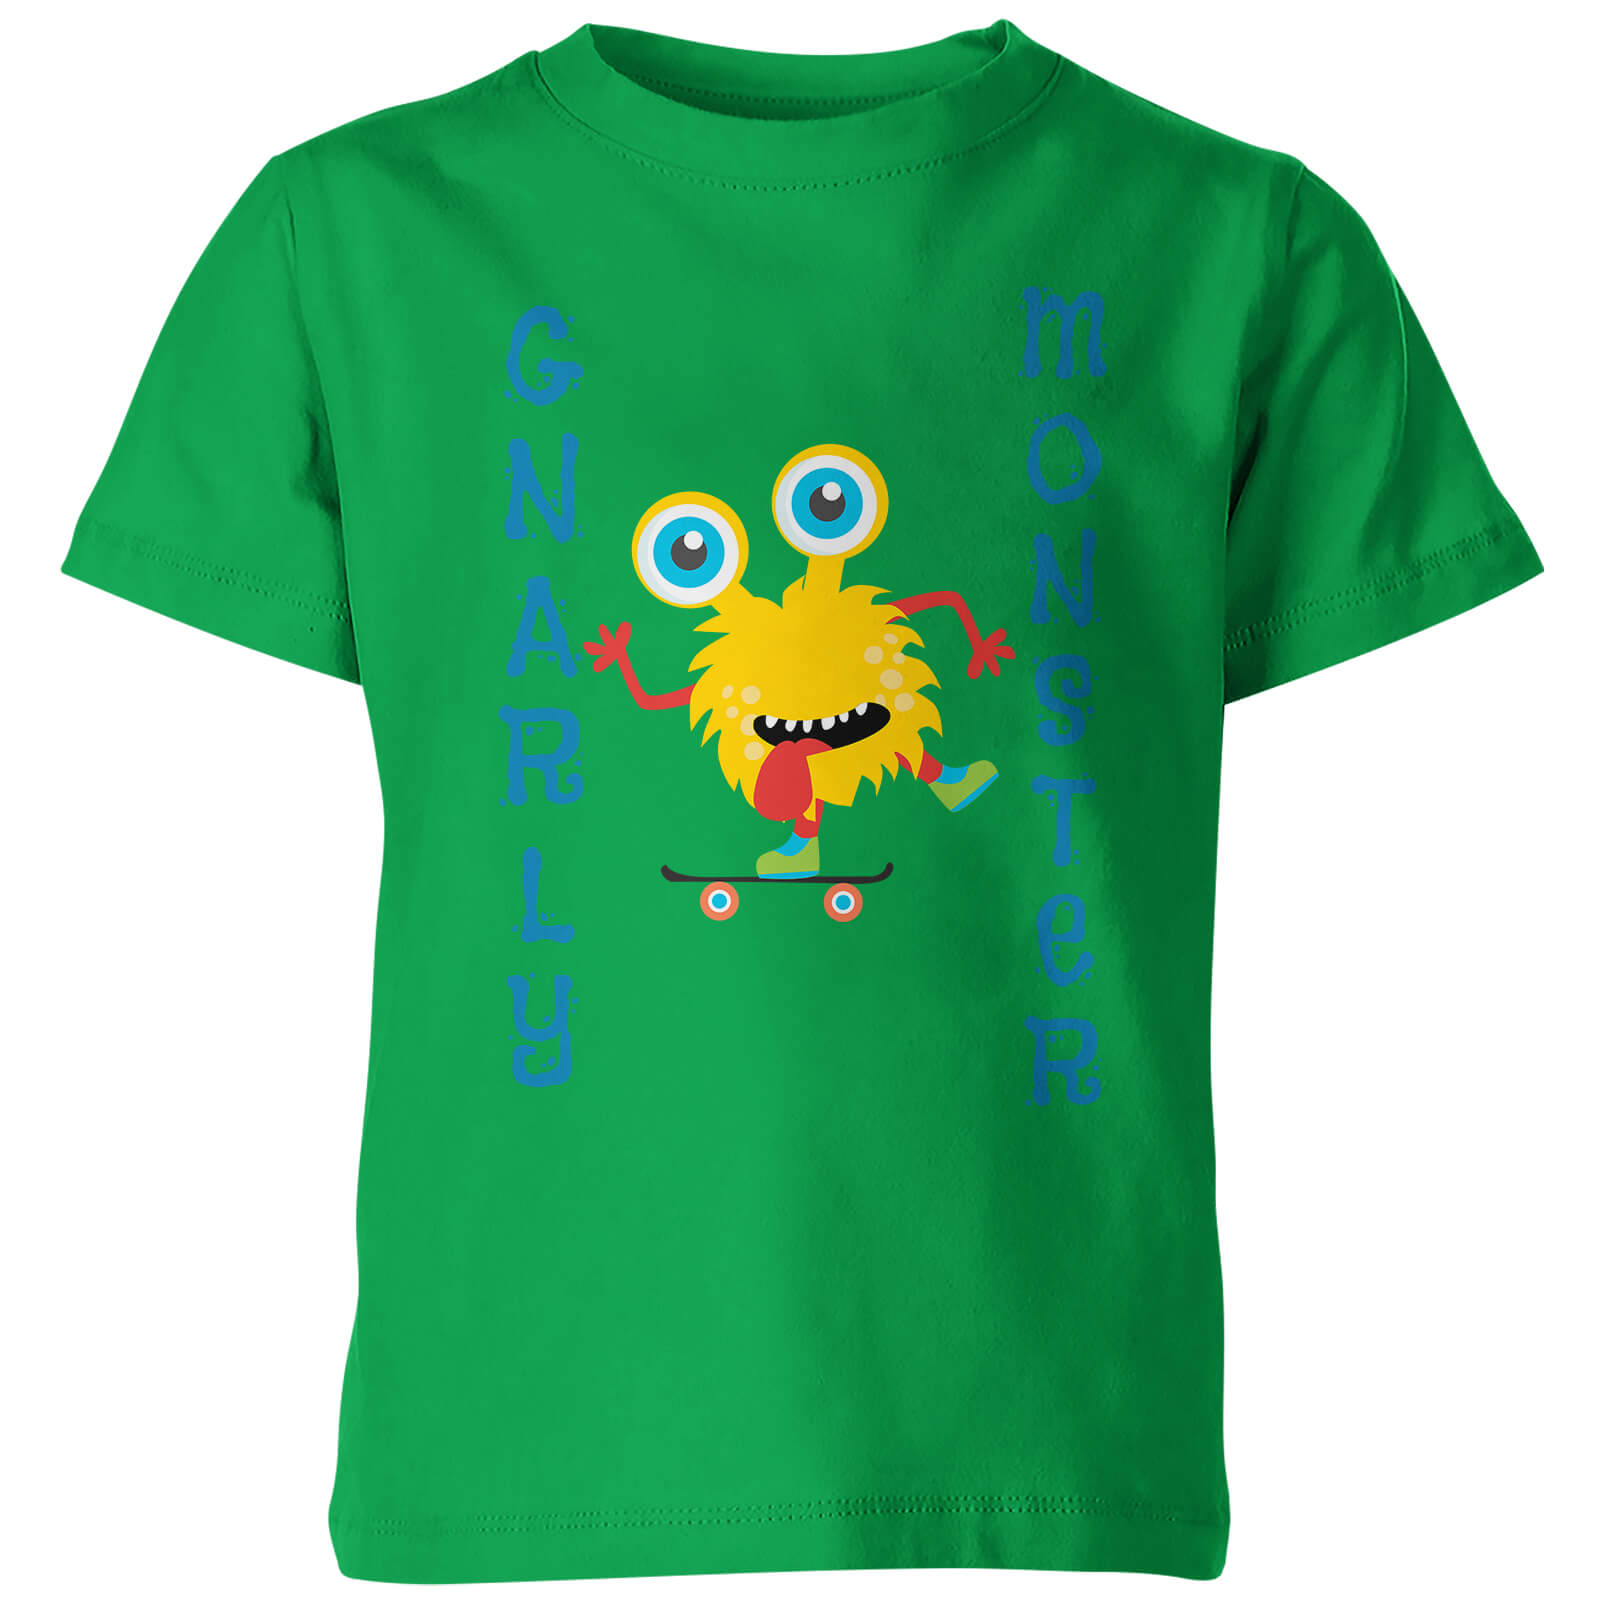 My Little Rascal Kids Gnarly Monster Green T-Shirt - 3-4 Years - Green